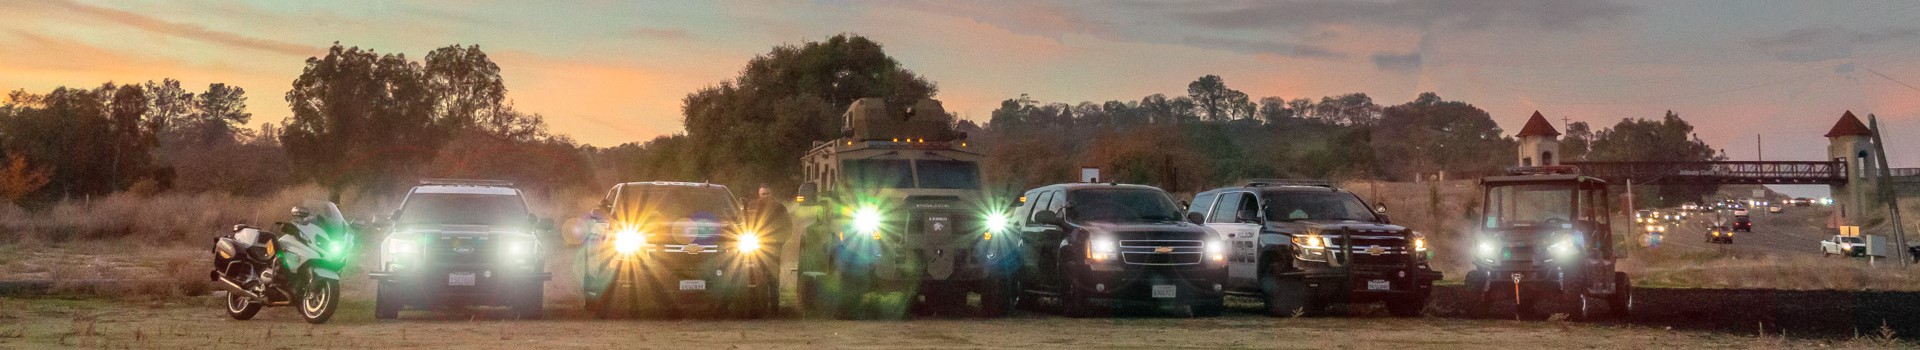 Folsom Police Vehicles with Headlights On next to Johnny Cash Bridge